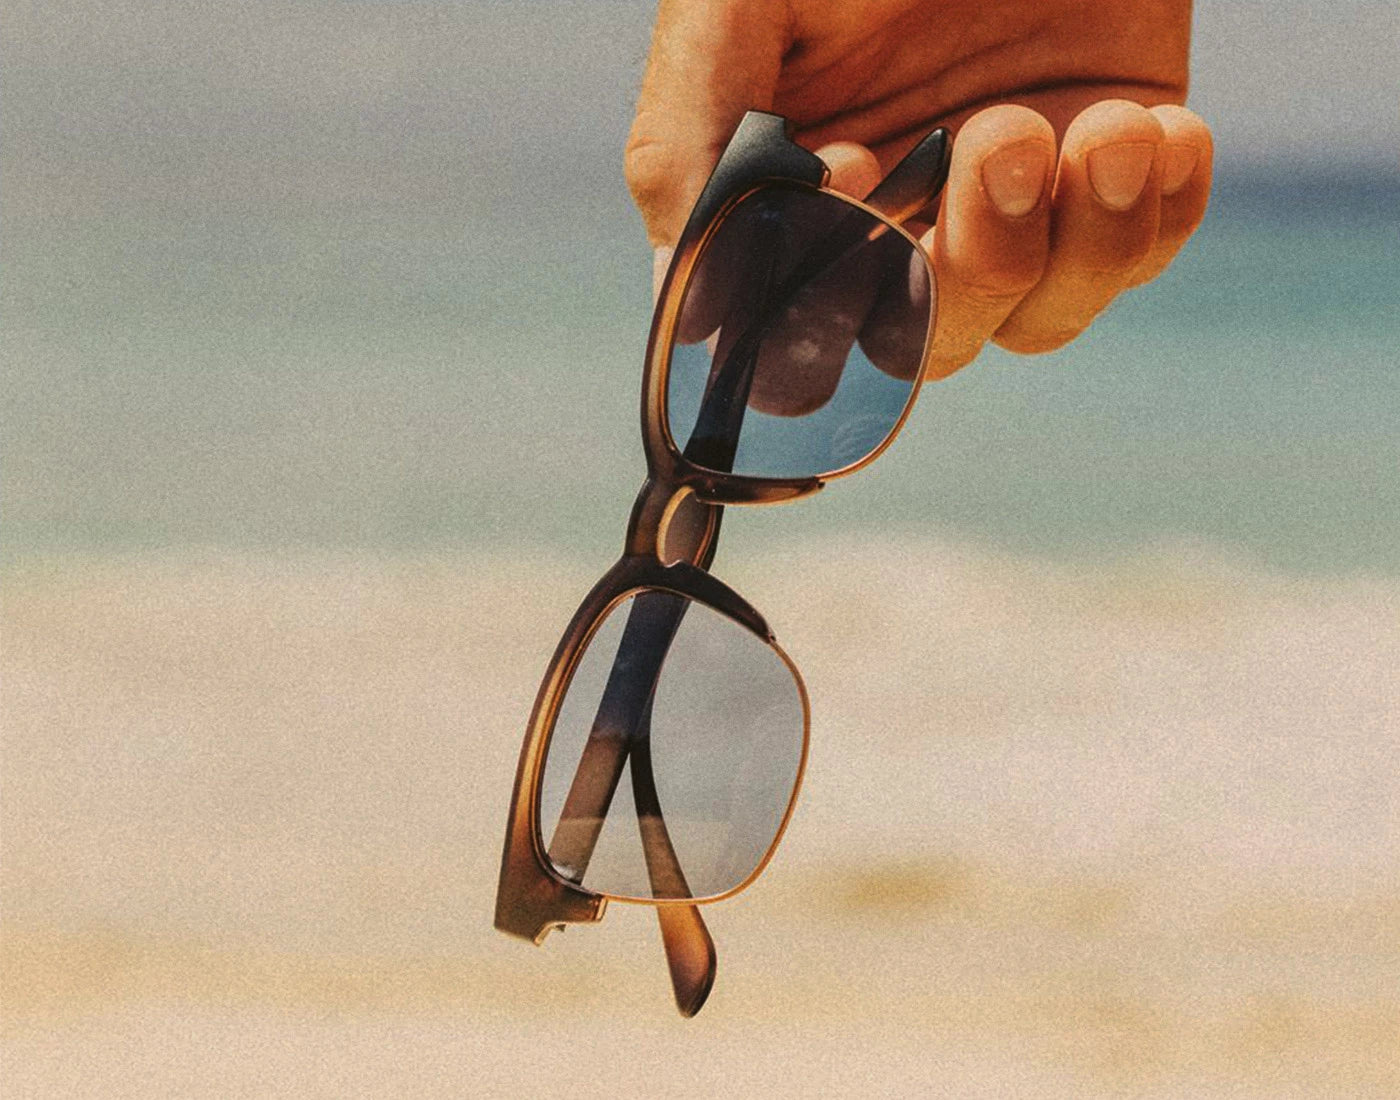 Sunski Sunglasses at a beach